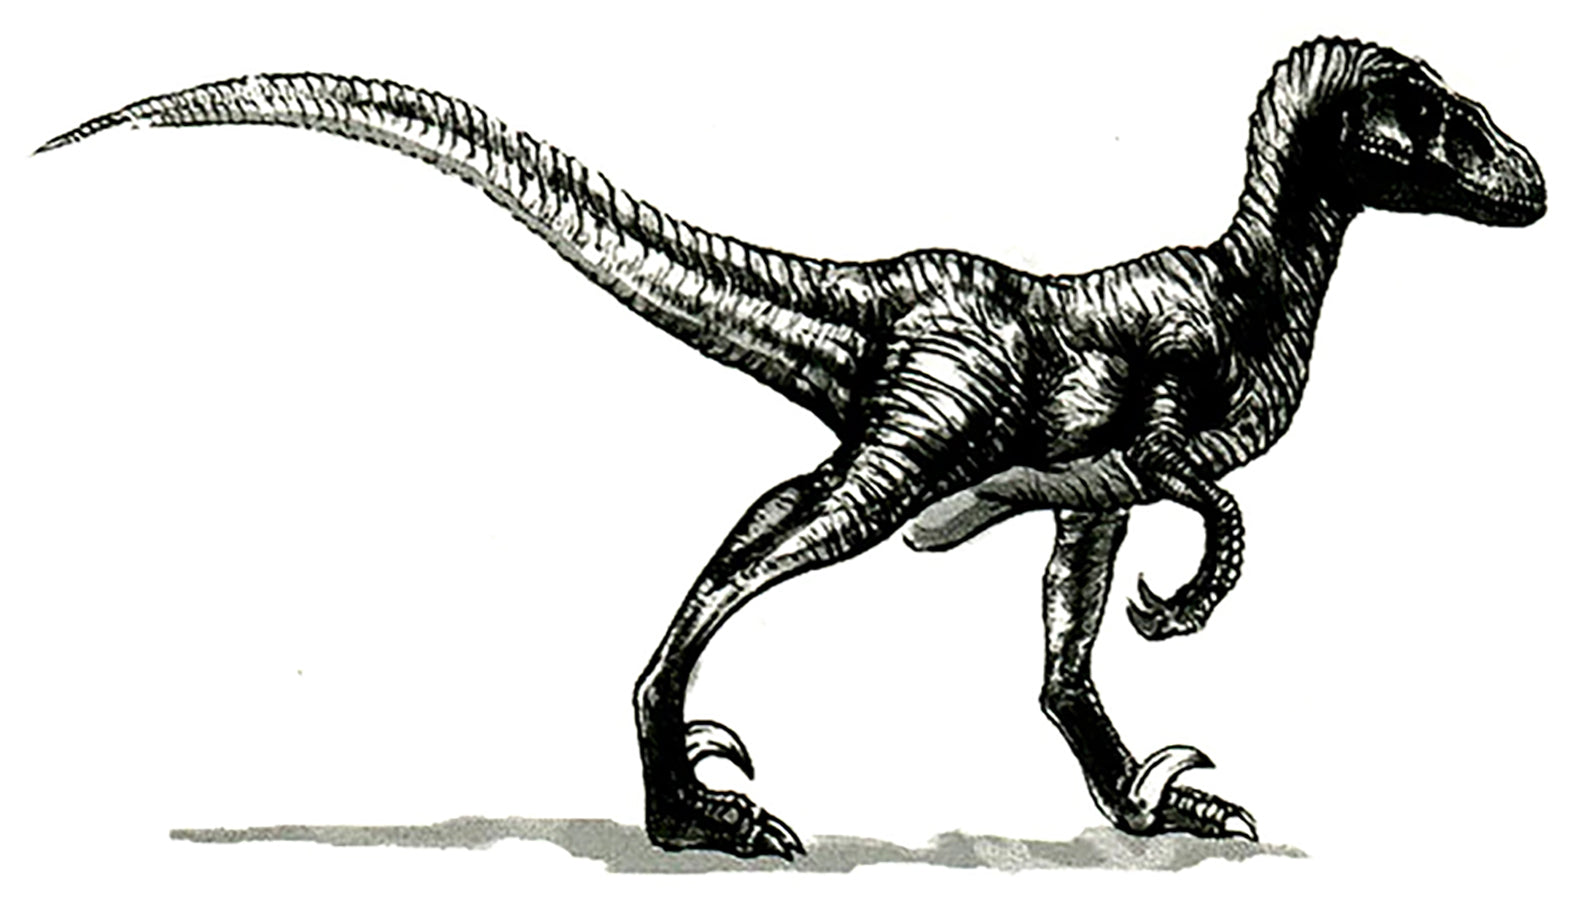 Tyranosaurus Dinosaur Waterproof Temporary Tattoos 2 Sheets